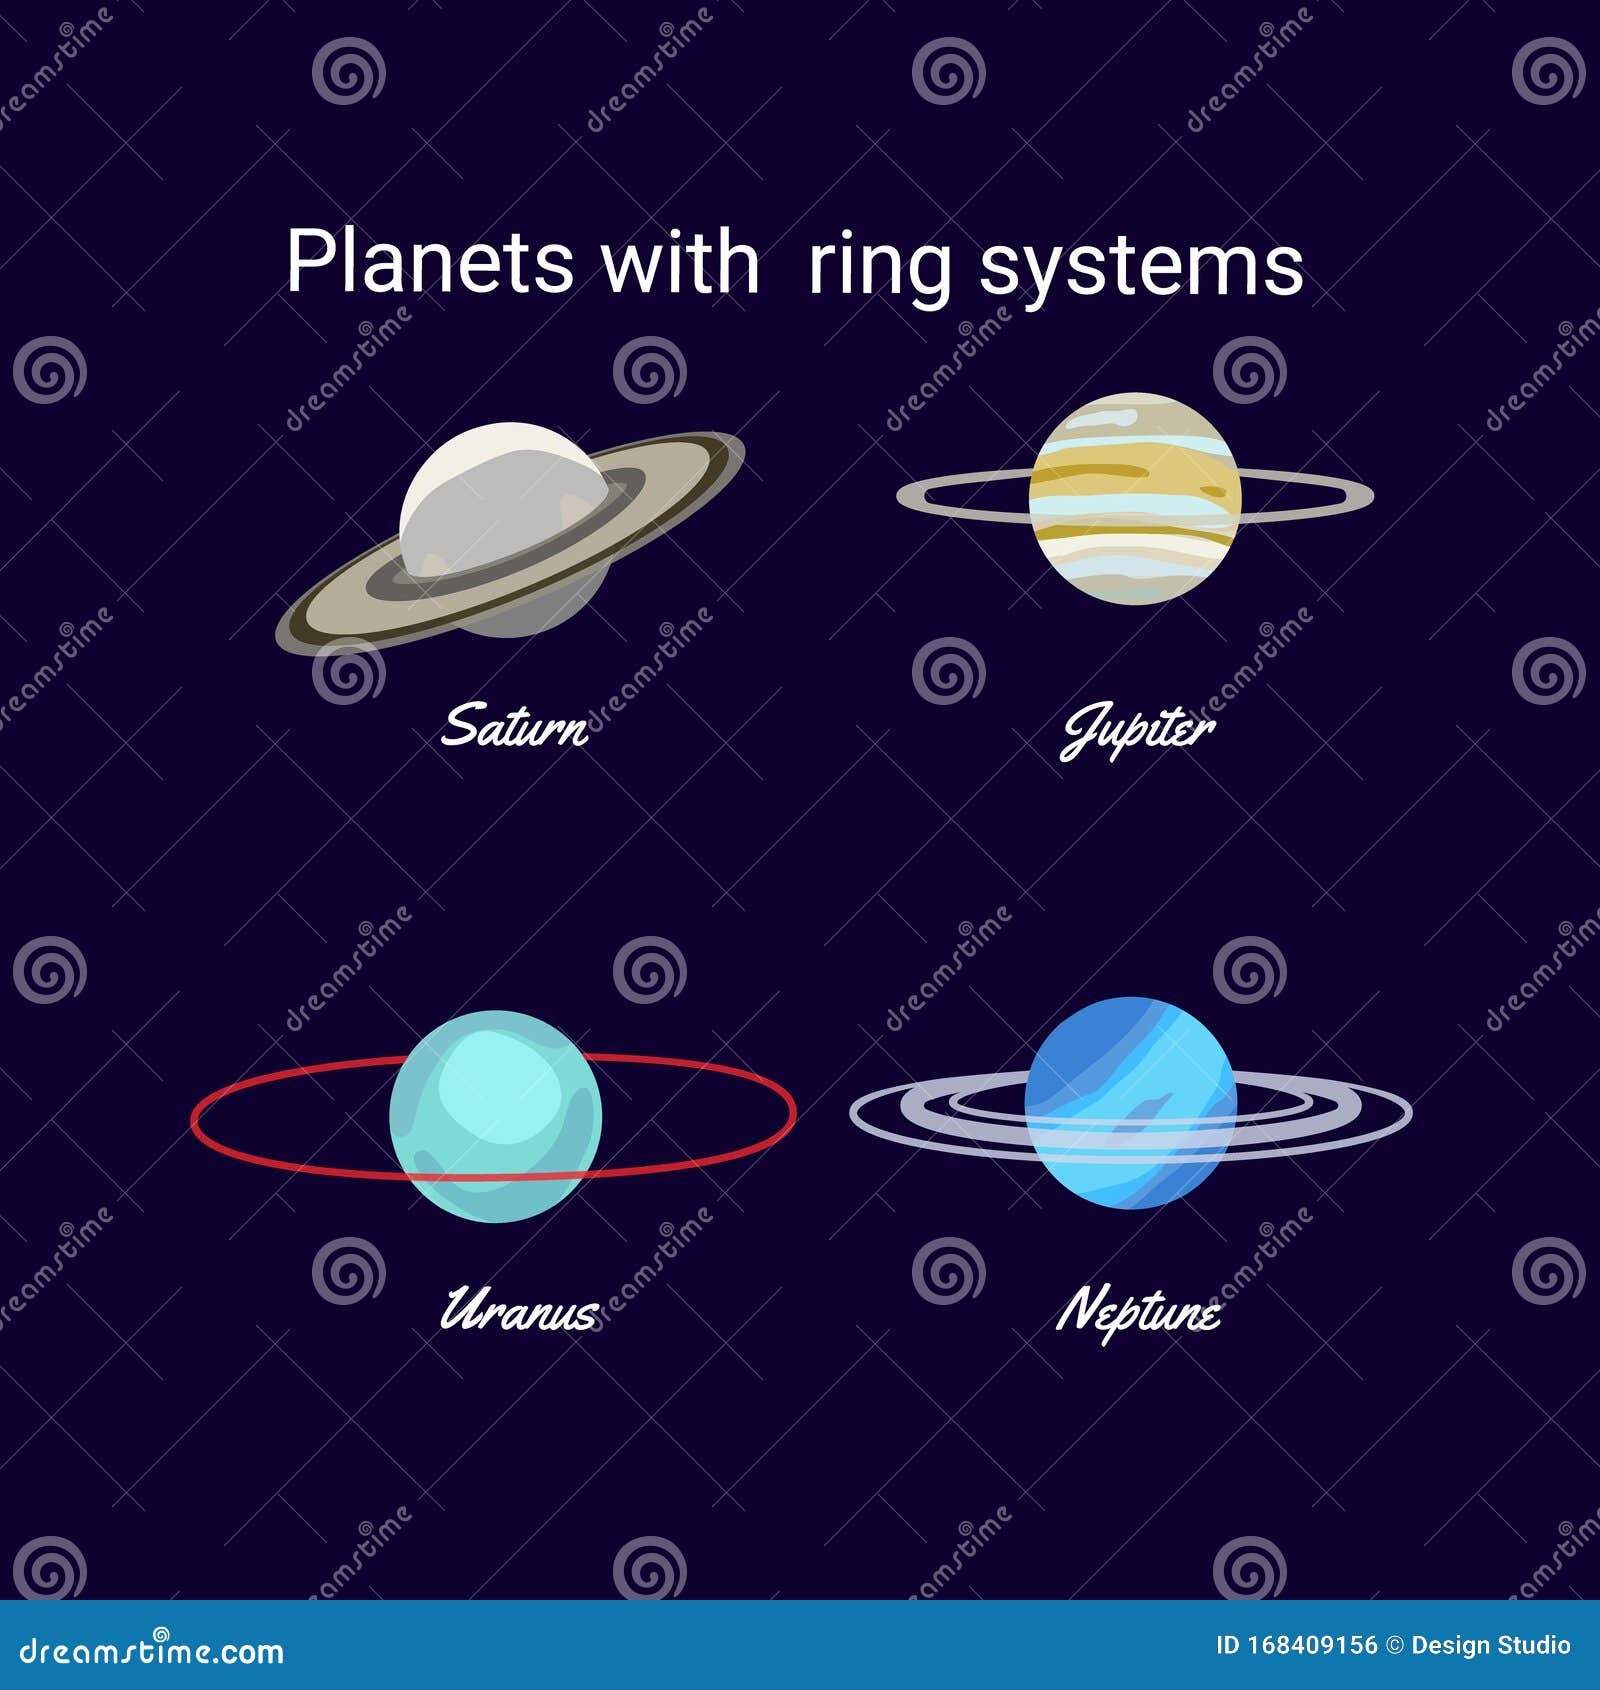 Saturn's Rings and Moons | NASA Planetary Sciences | PBS LearningMedia